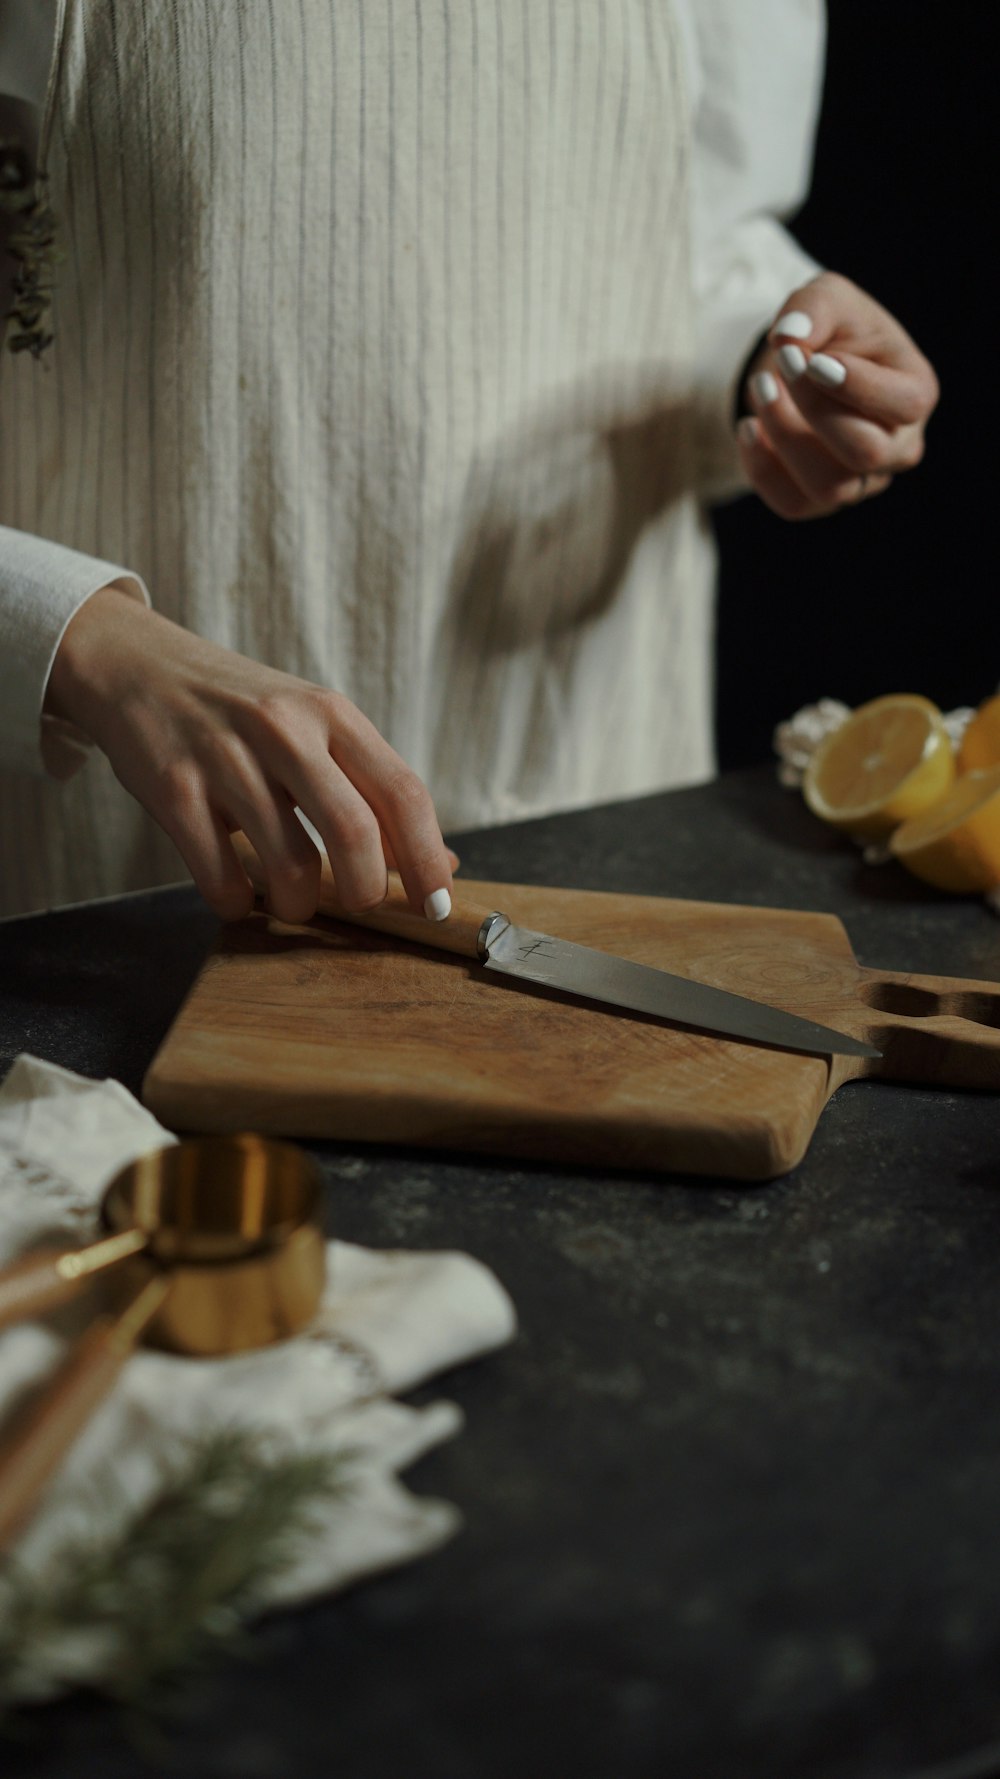 a woman is cutting oranges on a cutting board